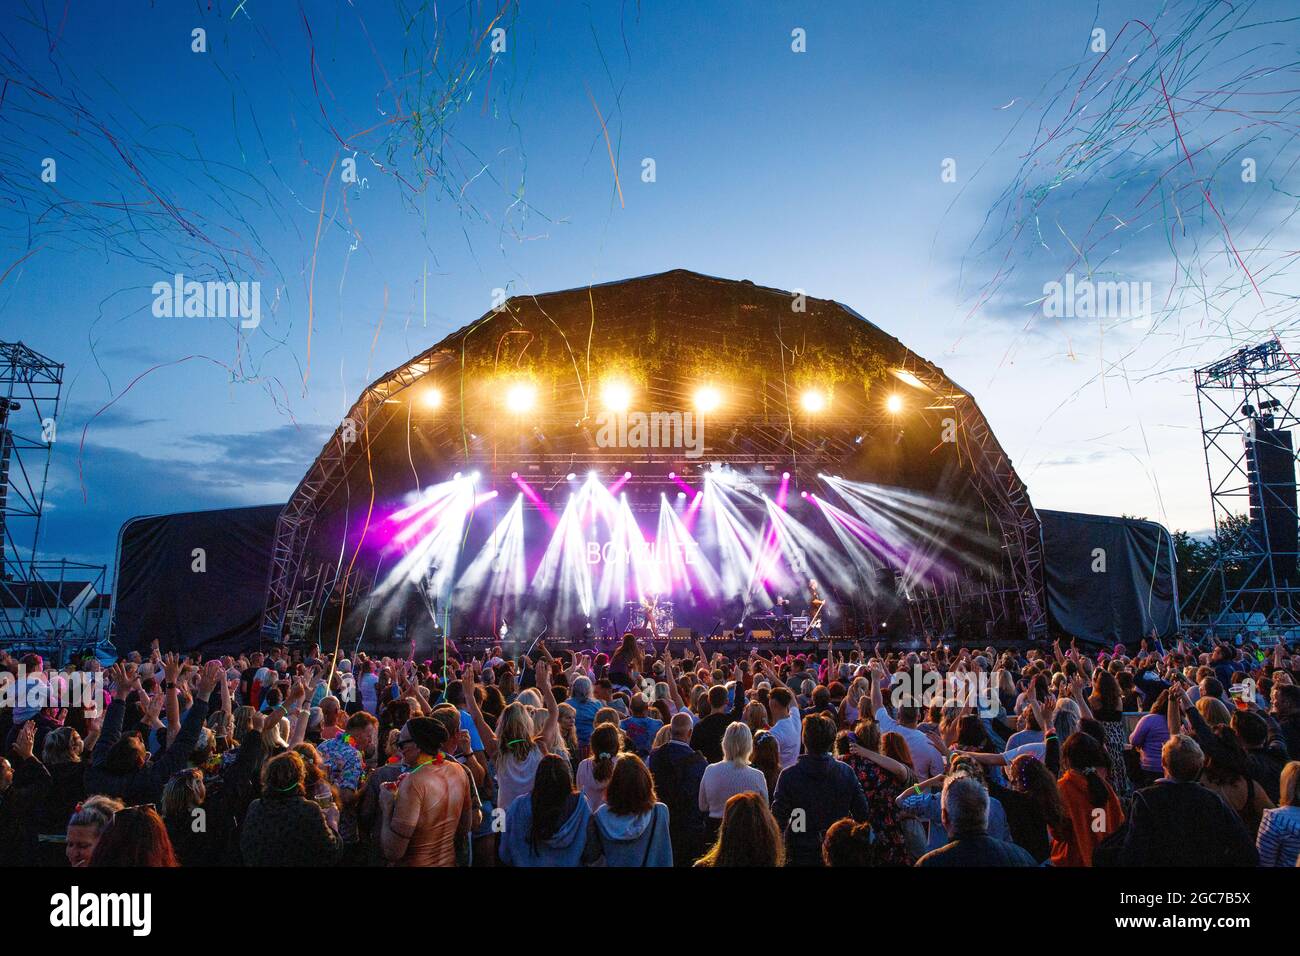 Boyzlife, Fantasia Festival, Maldon, Essex © Clarissa Debenham / Alamy Stock Photo